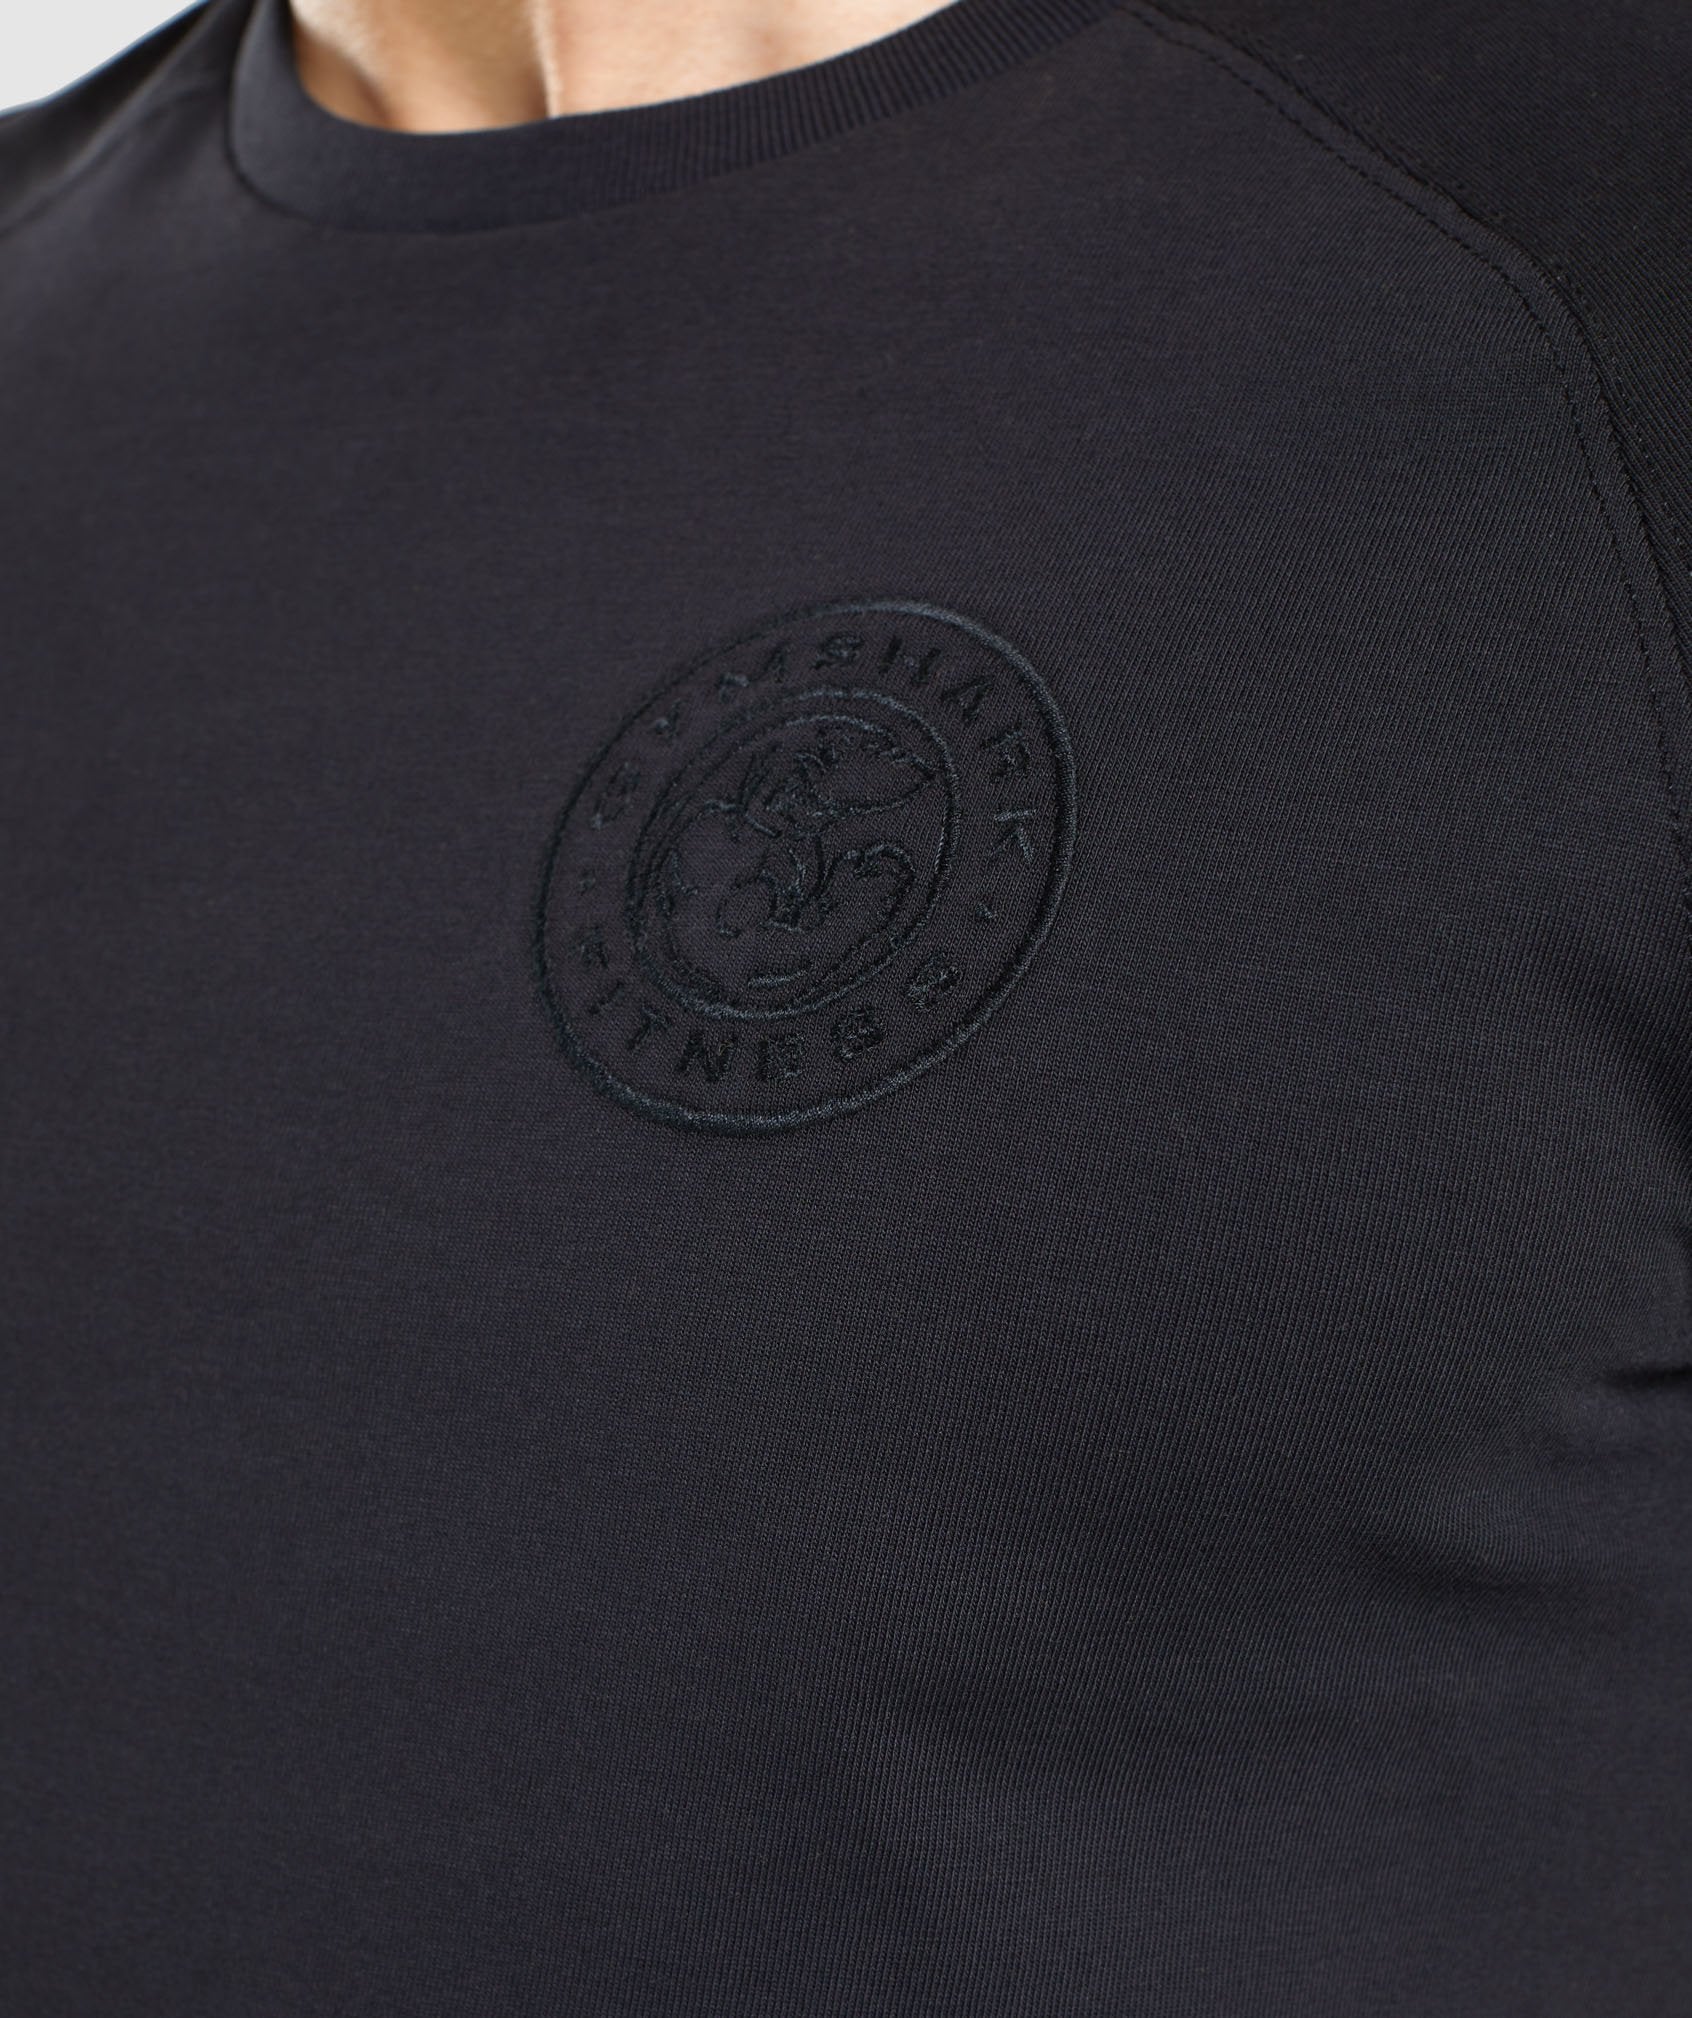 Premium Legacy T-Shirt in Black - view 5